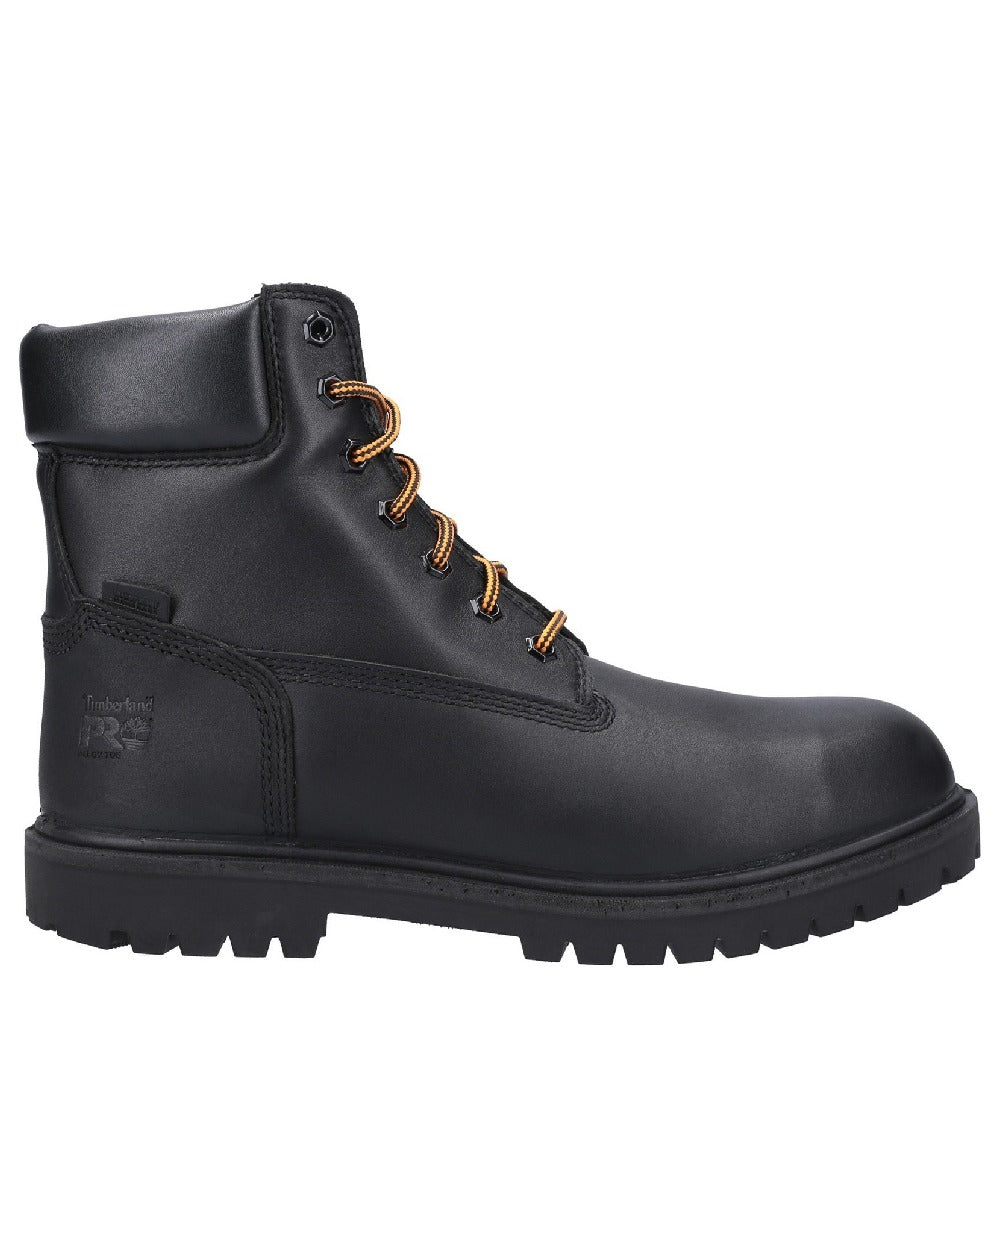 Black coloured Timberland Pro Iconic Safety Toe Work Boots on white background 